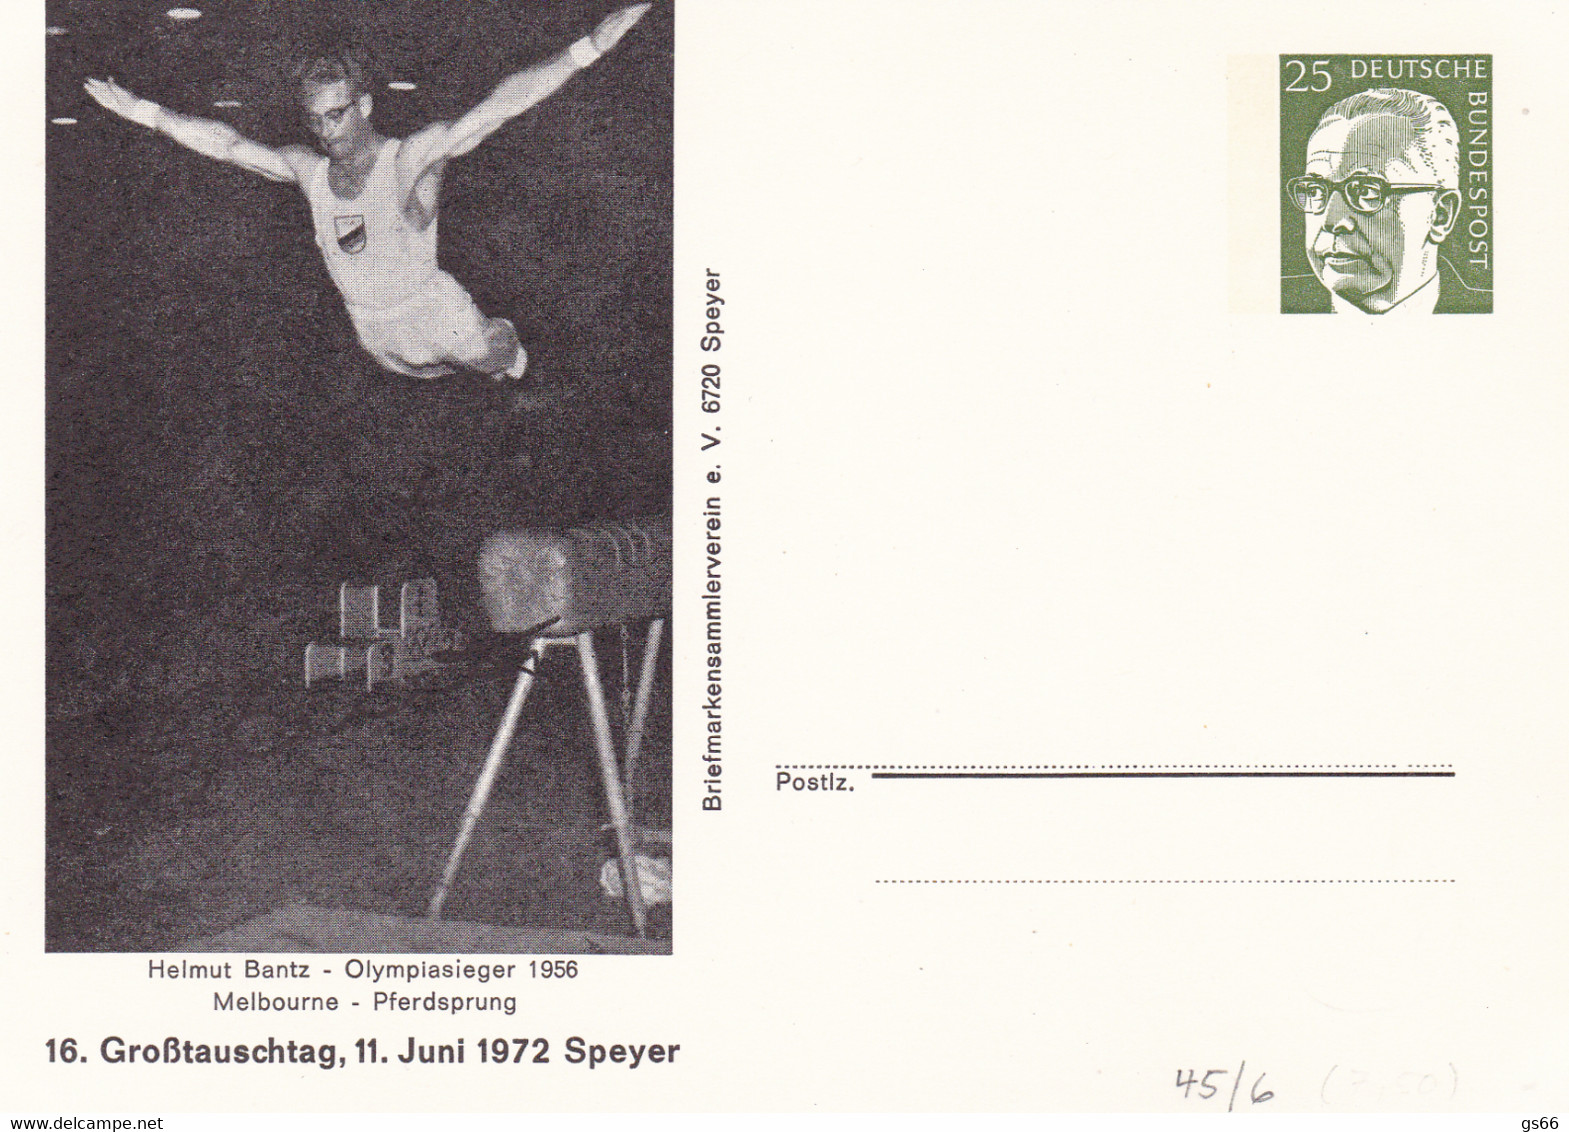 BRD, PP 045 C2/006, Speyer, Helmut Bentz - Private Postcards - Mint